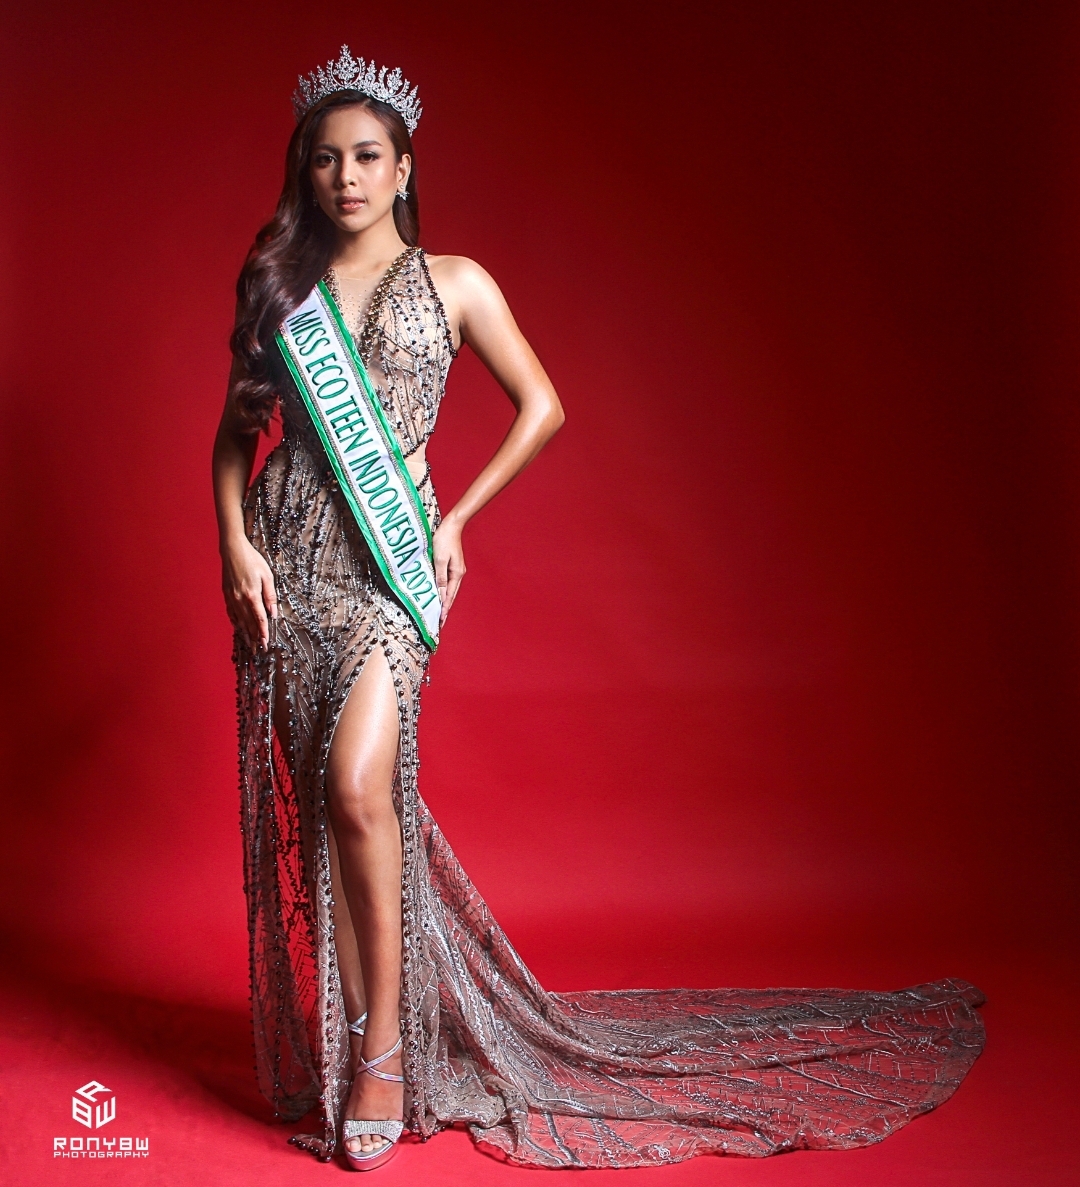 Miss Eco Teen Indonesia 2021, Jasmine Sylphia Valentine Patahkan Stigma Dan Mengejar Mimpinya